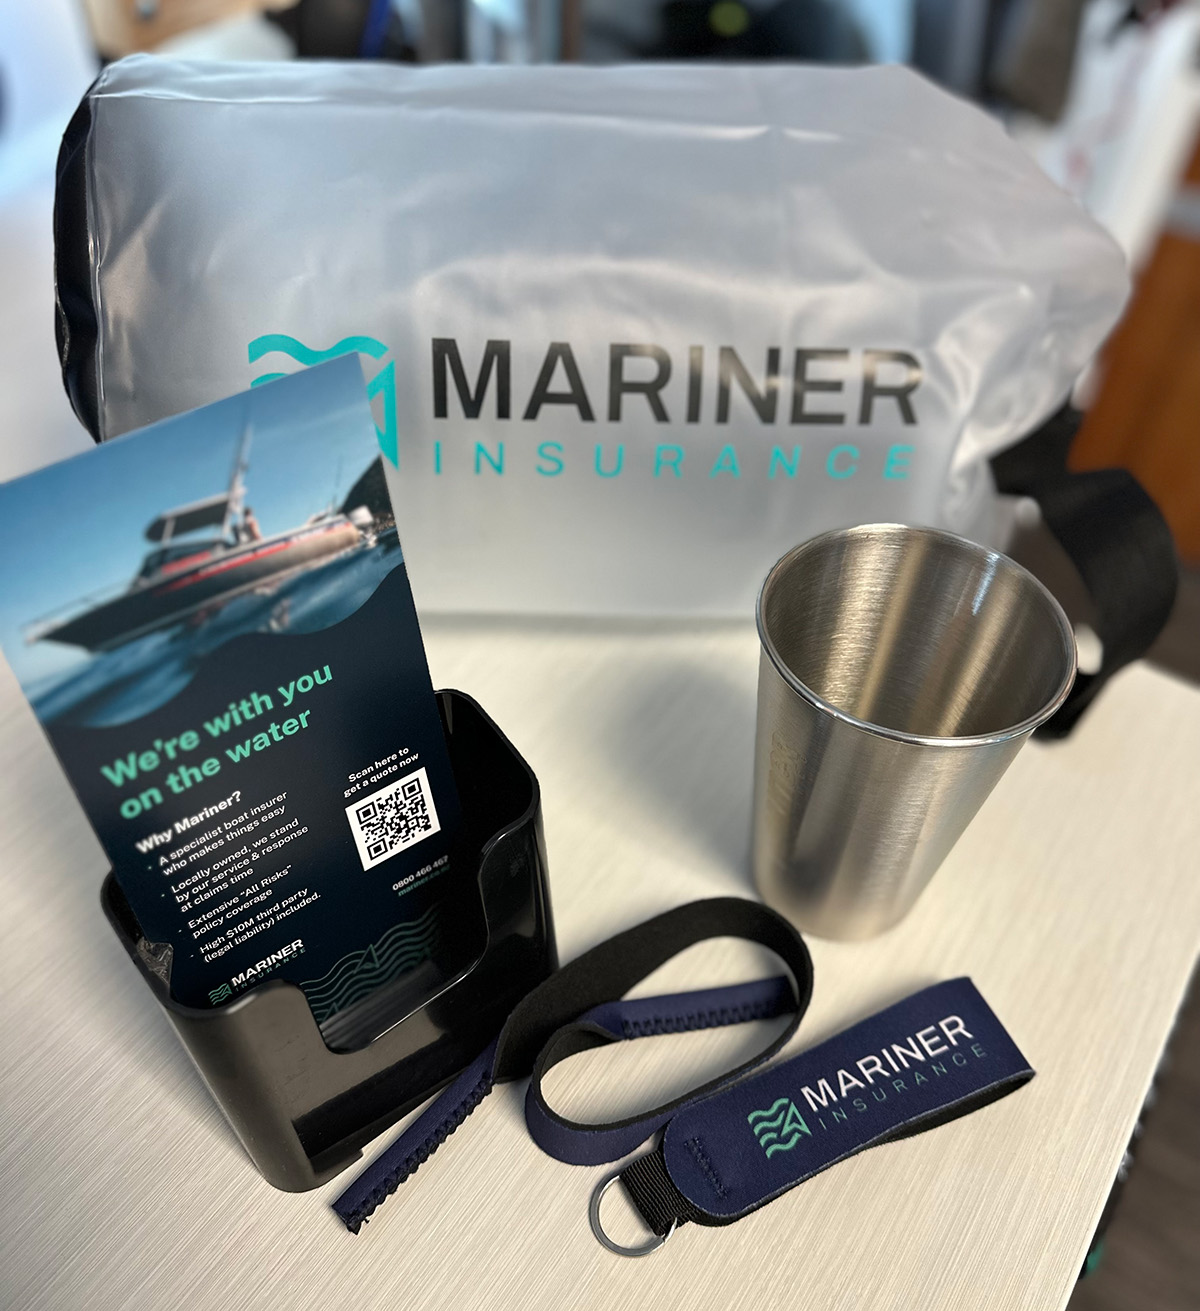 Looking down on Mariner Insurance marketing merchandise 